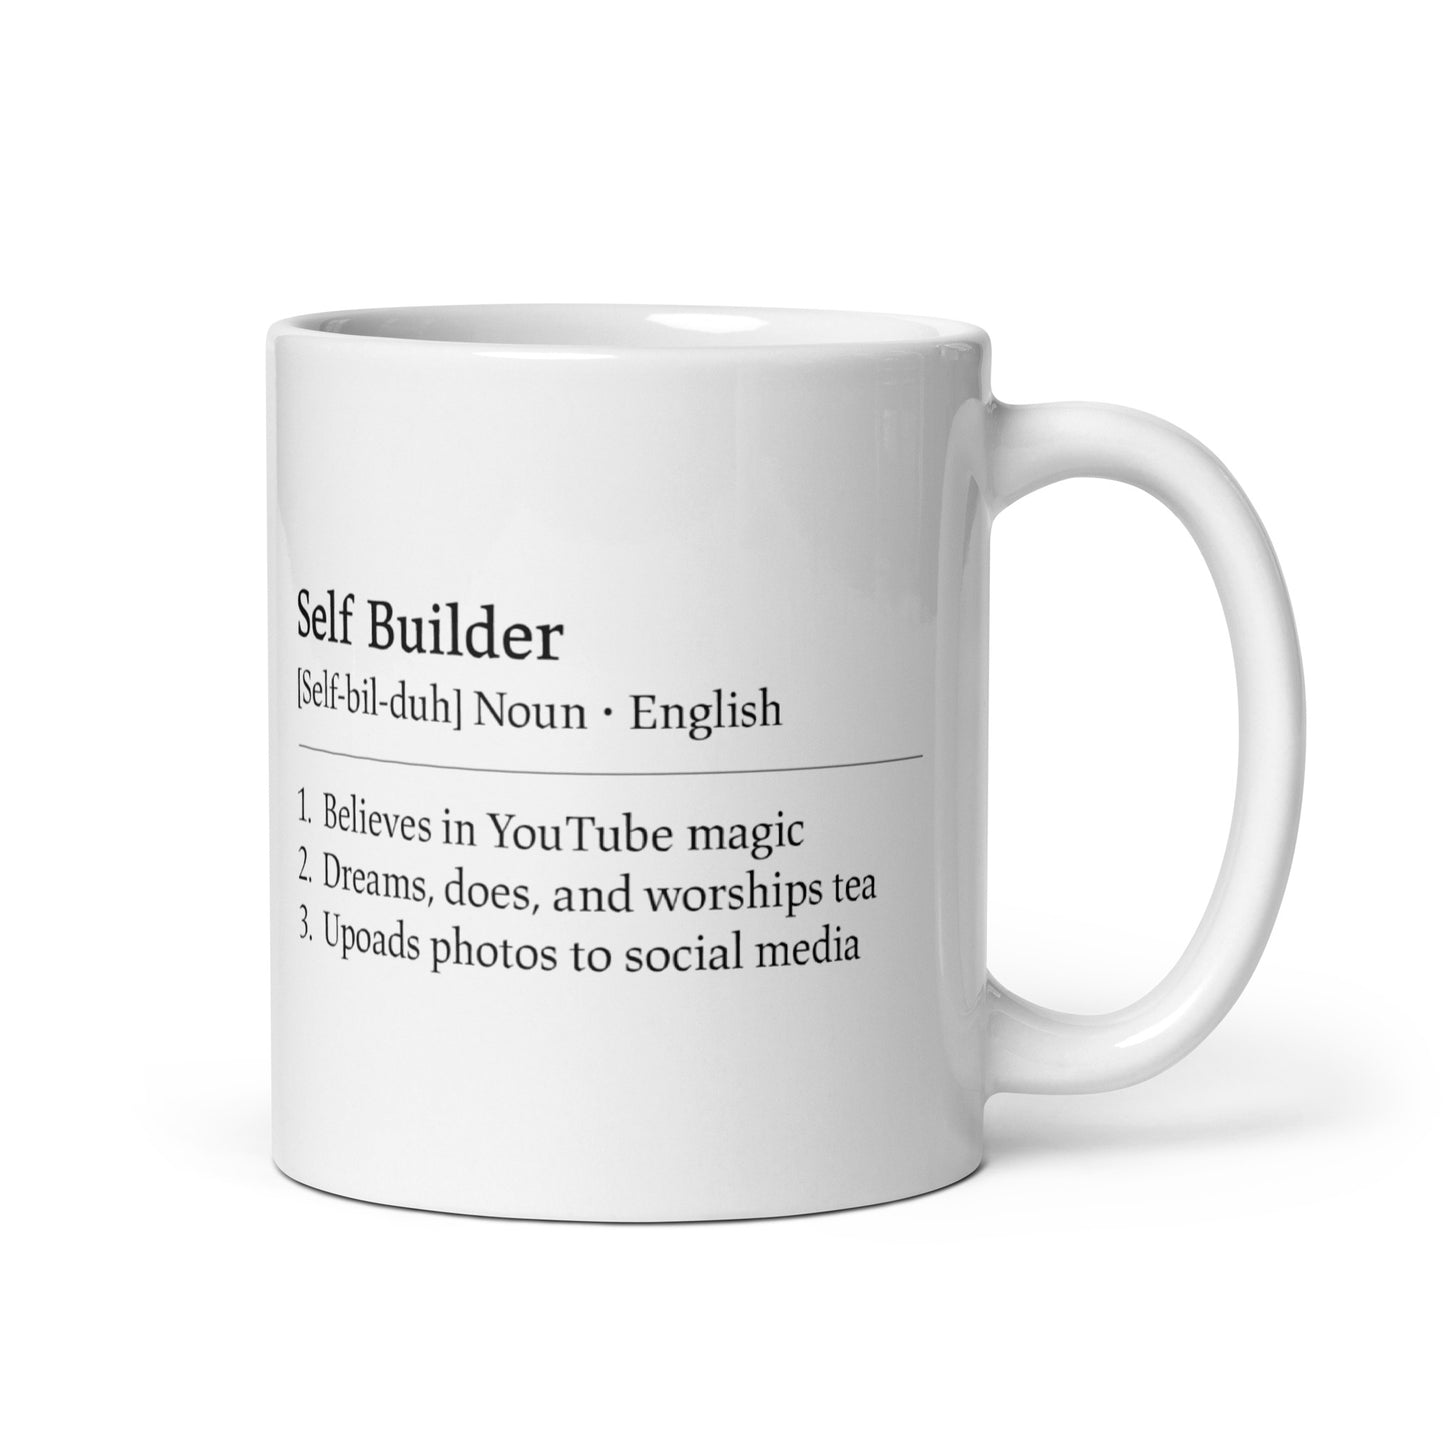 Define a Self Builder? - Informative 11oz Mug - Perfect Gift for DIY Enthusiasts